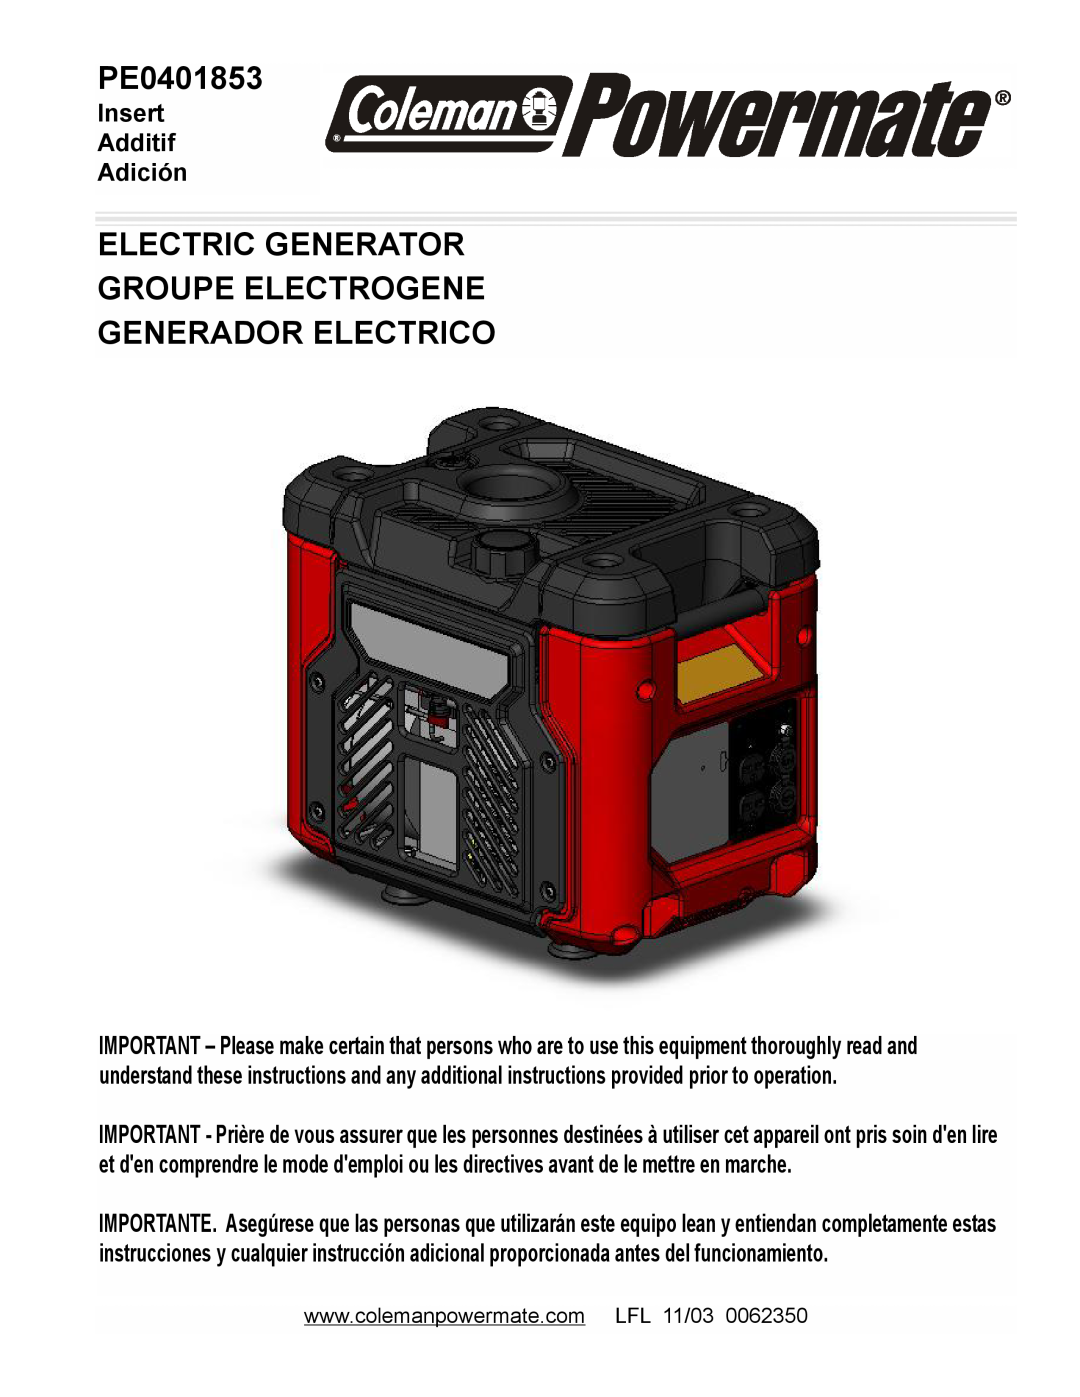 Powermate PE0401853 manual Electric Generator Groupe Electrogene Generador Electrico, Insert Additif Adición 